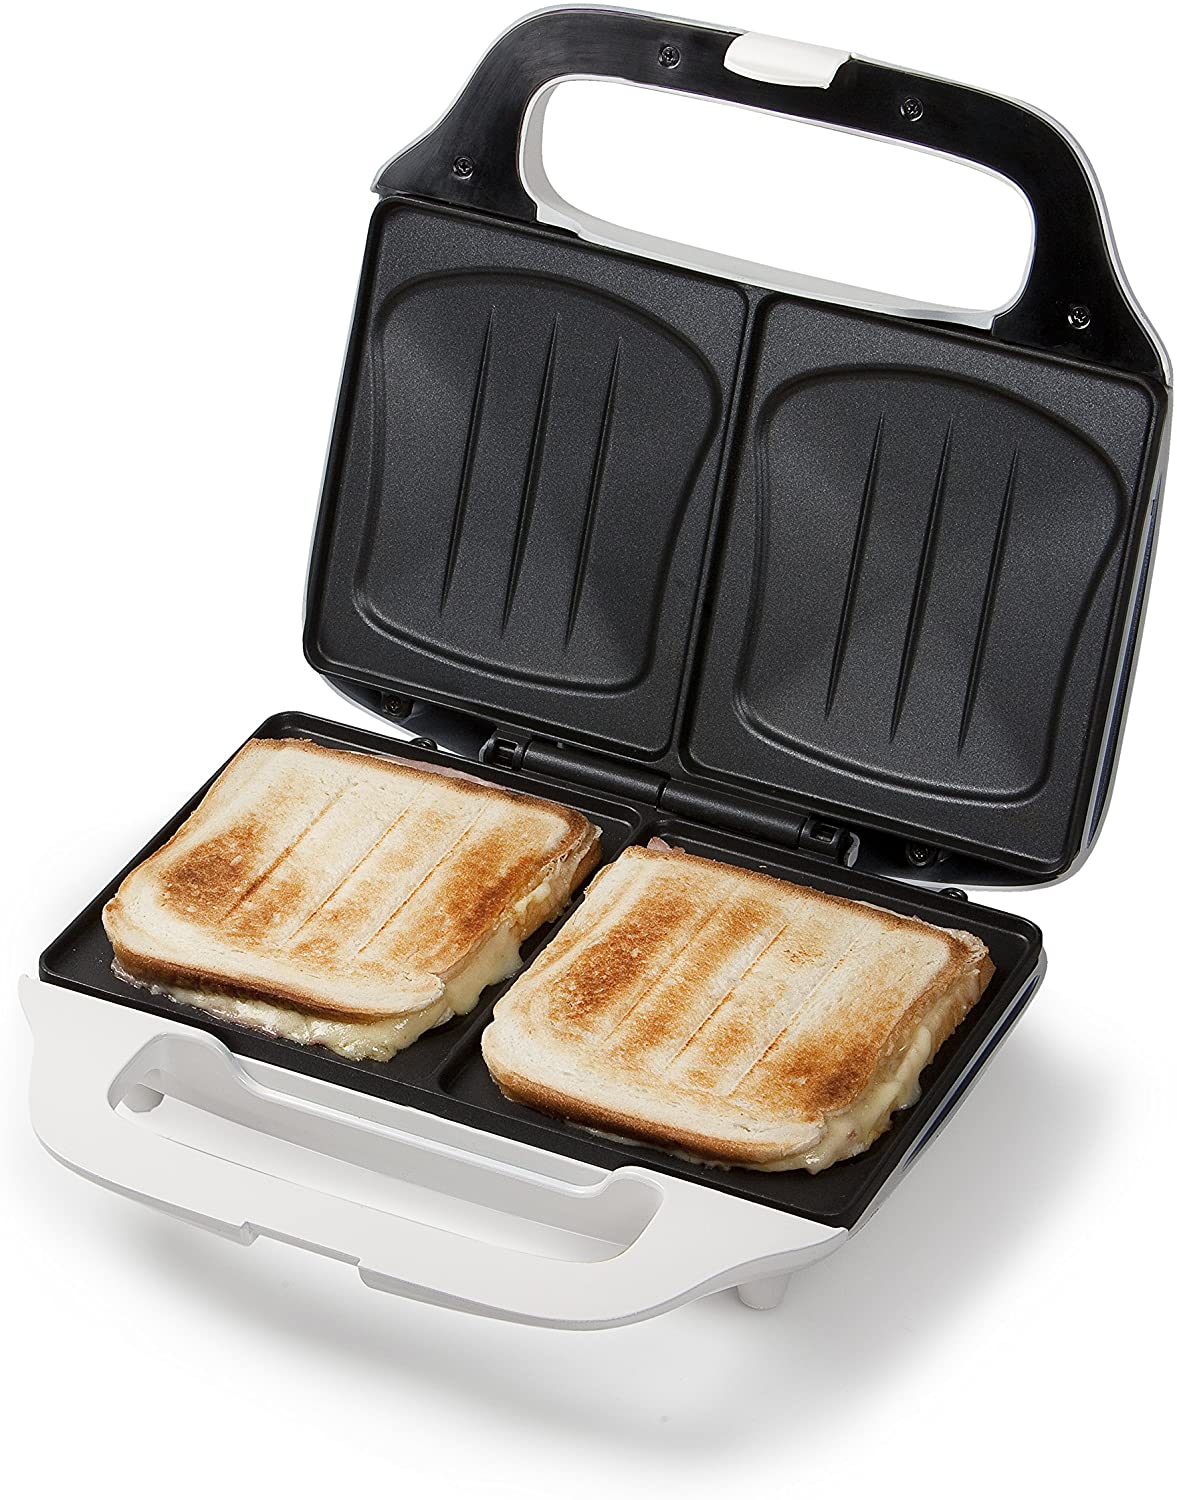 XL-Sandwich-Toaster, Sandwichmaker Shell form, 2 Sandwichtoasts simultaneously, strong 900Watt